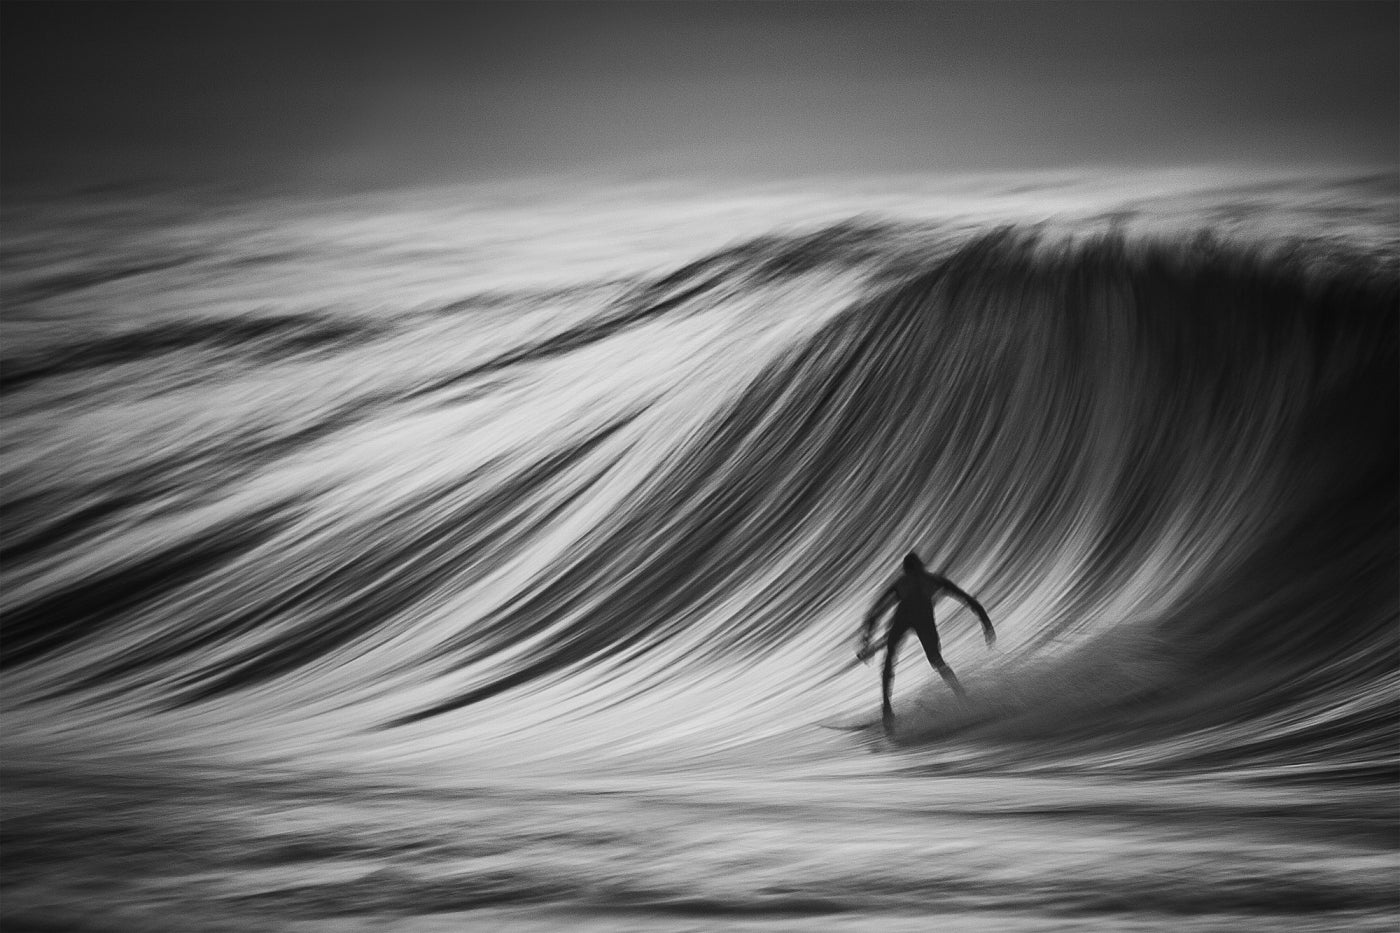 Silver surfer, Canon Light Awards Award winning image by Thurston Photo